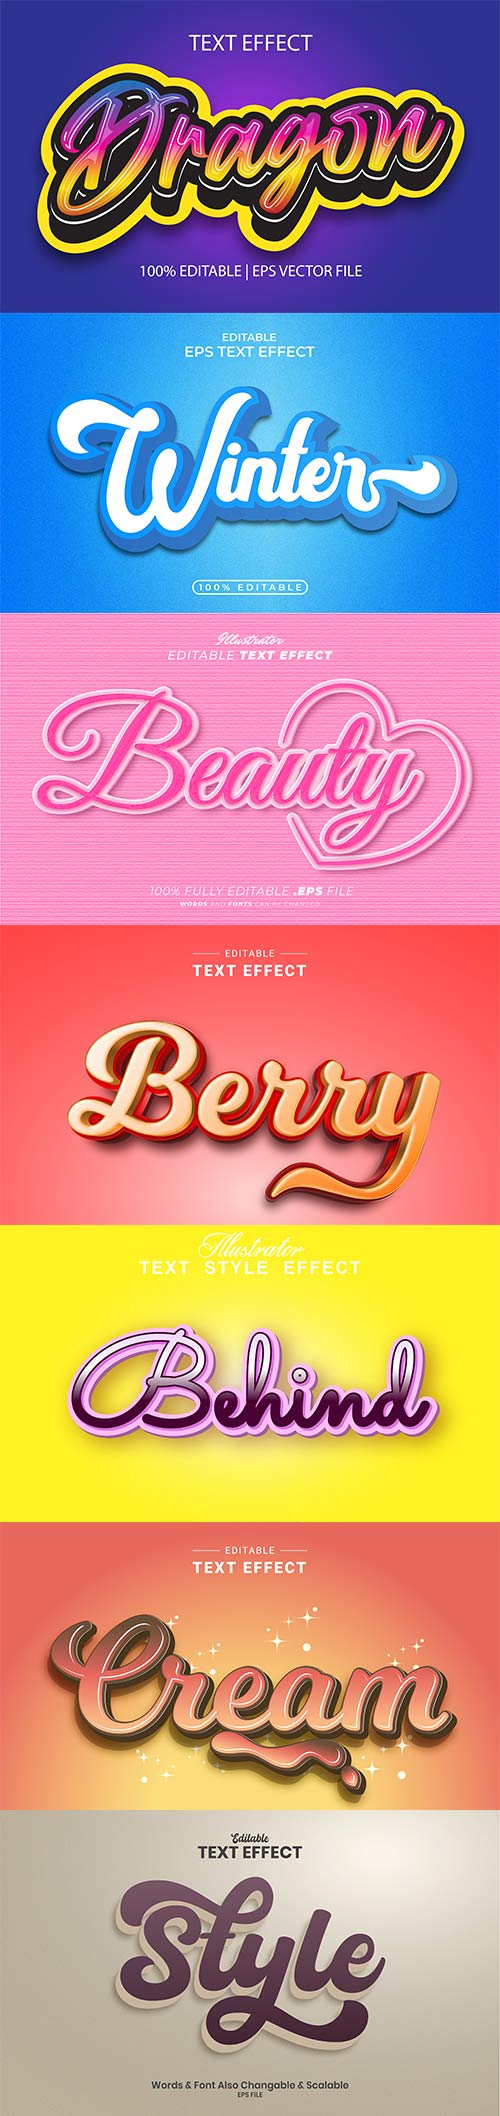 3d editable text style effect vector vol 898